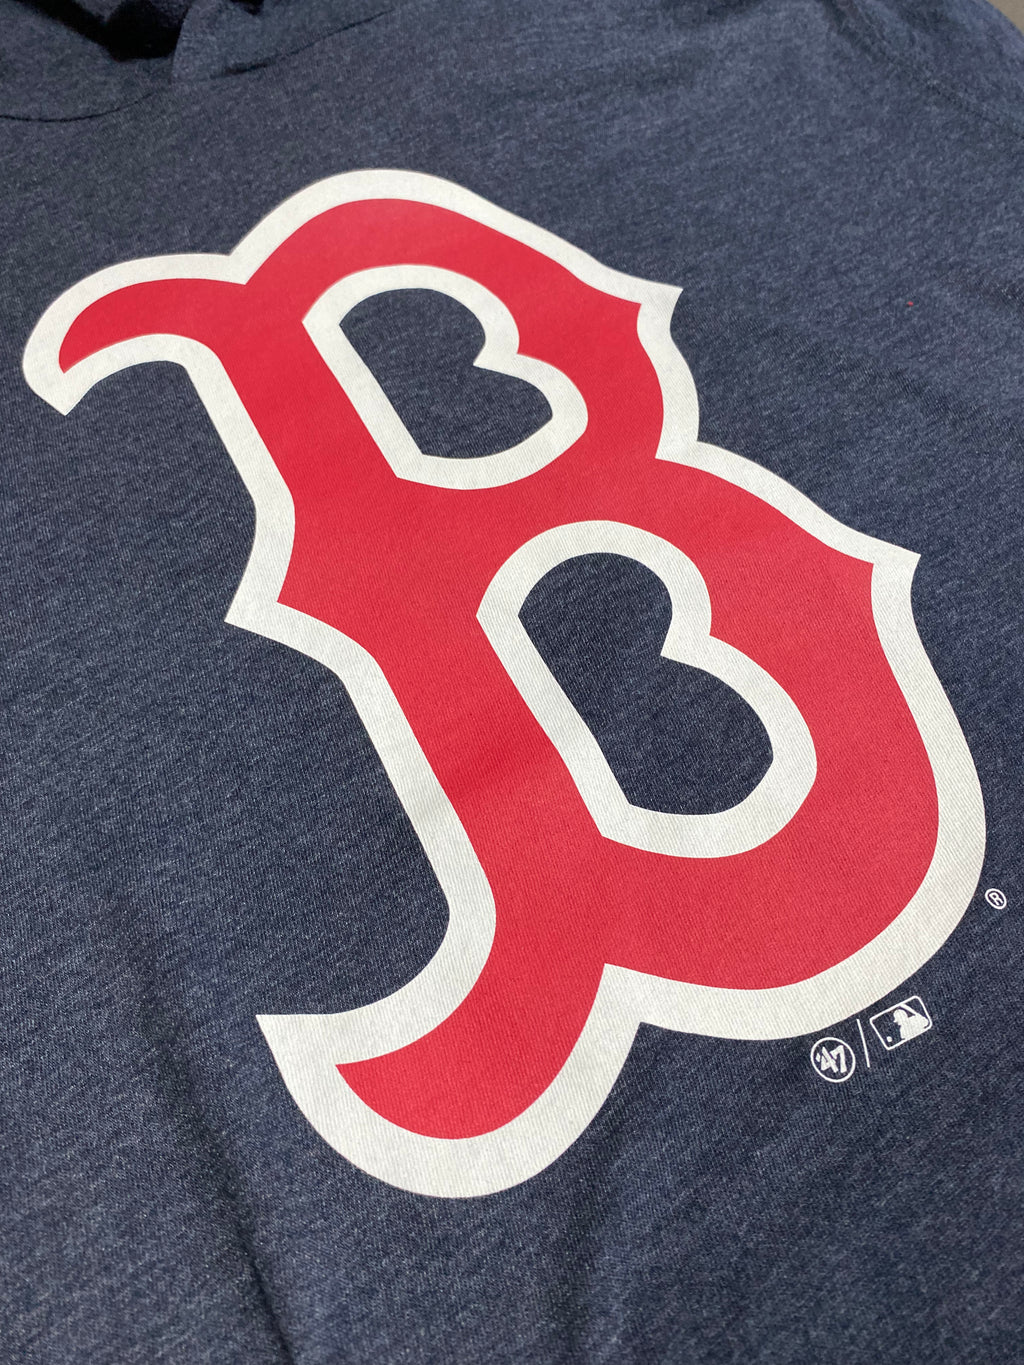 Playera manga larga 47 Brand MLB Red Sox Boston